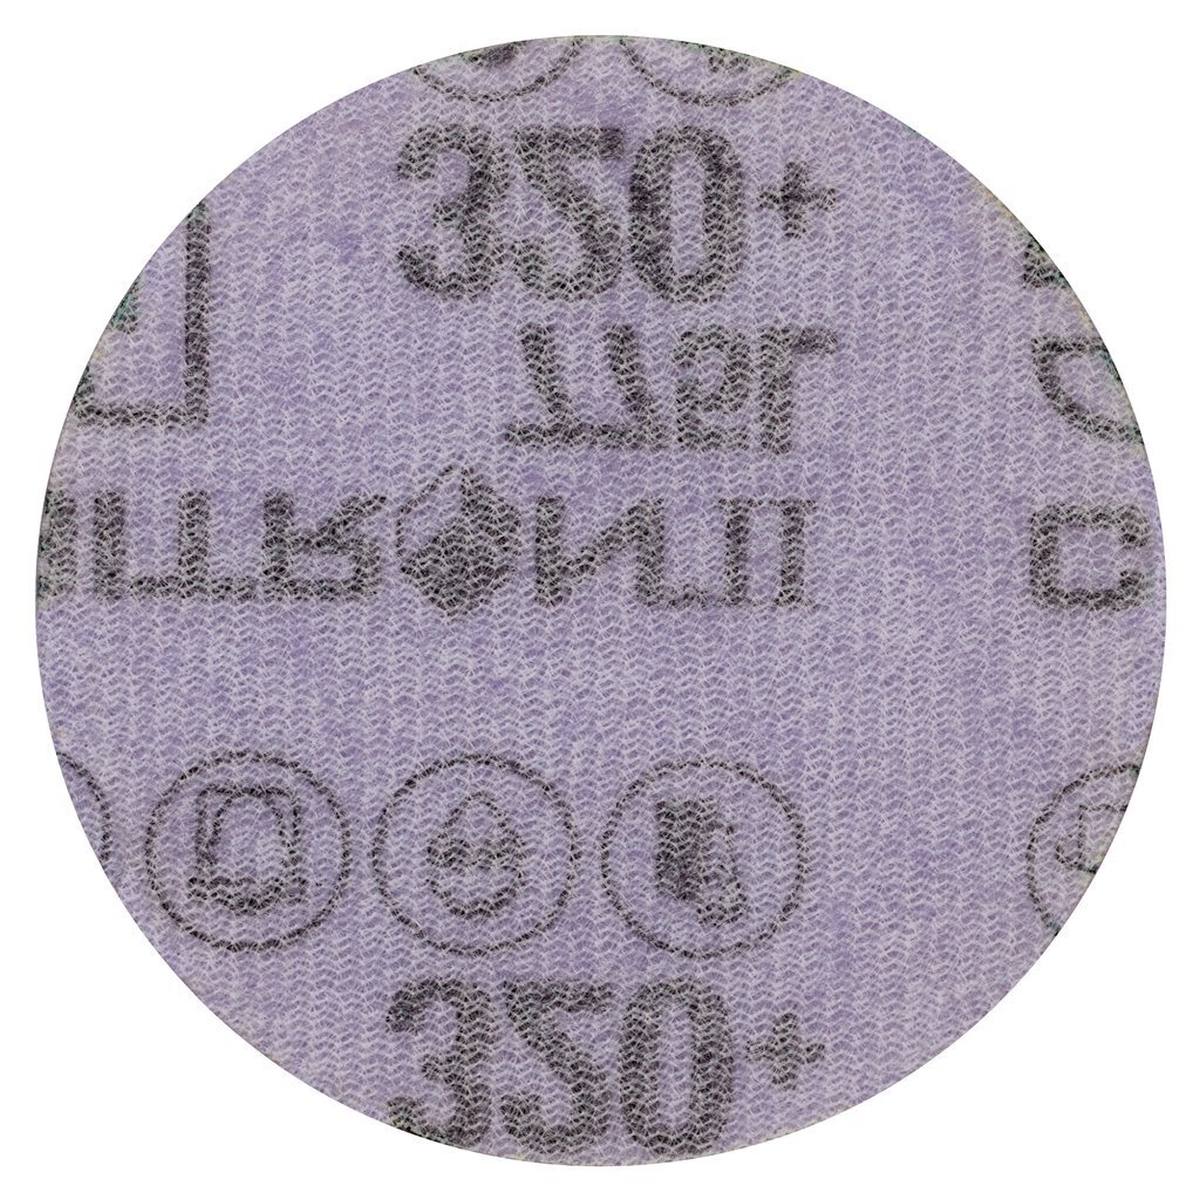 3M Cubitron II Hookit film disc 775L, 75 mm, 320+, unperforated